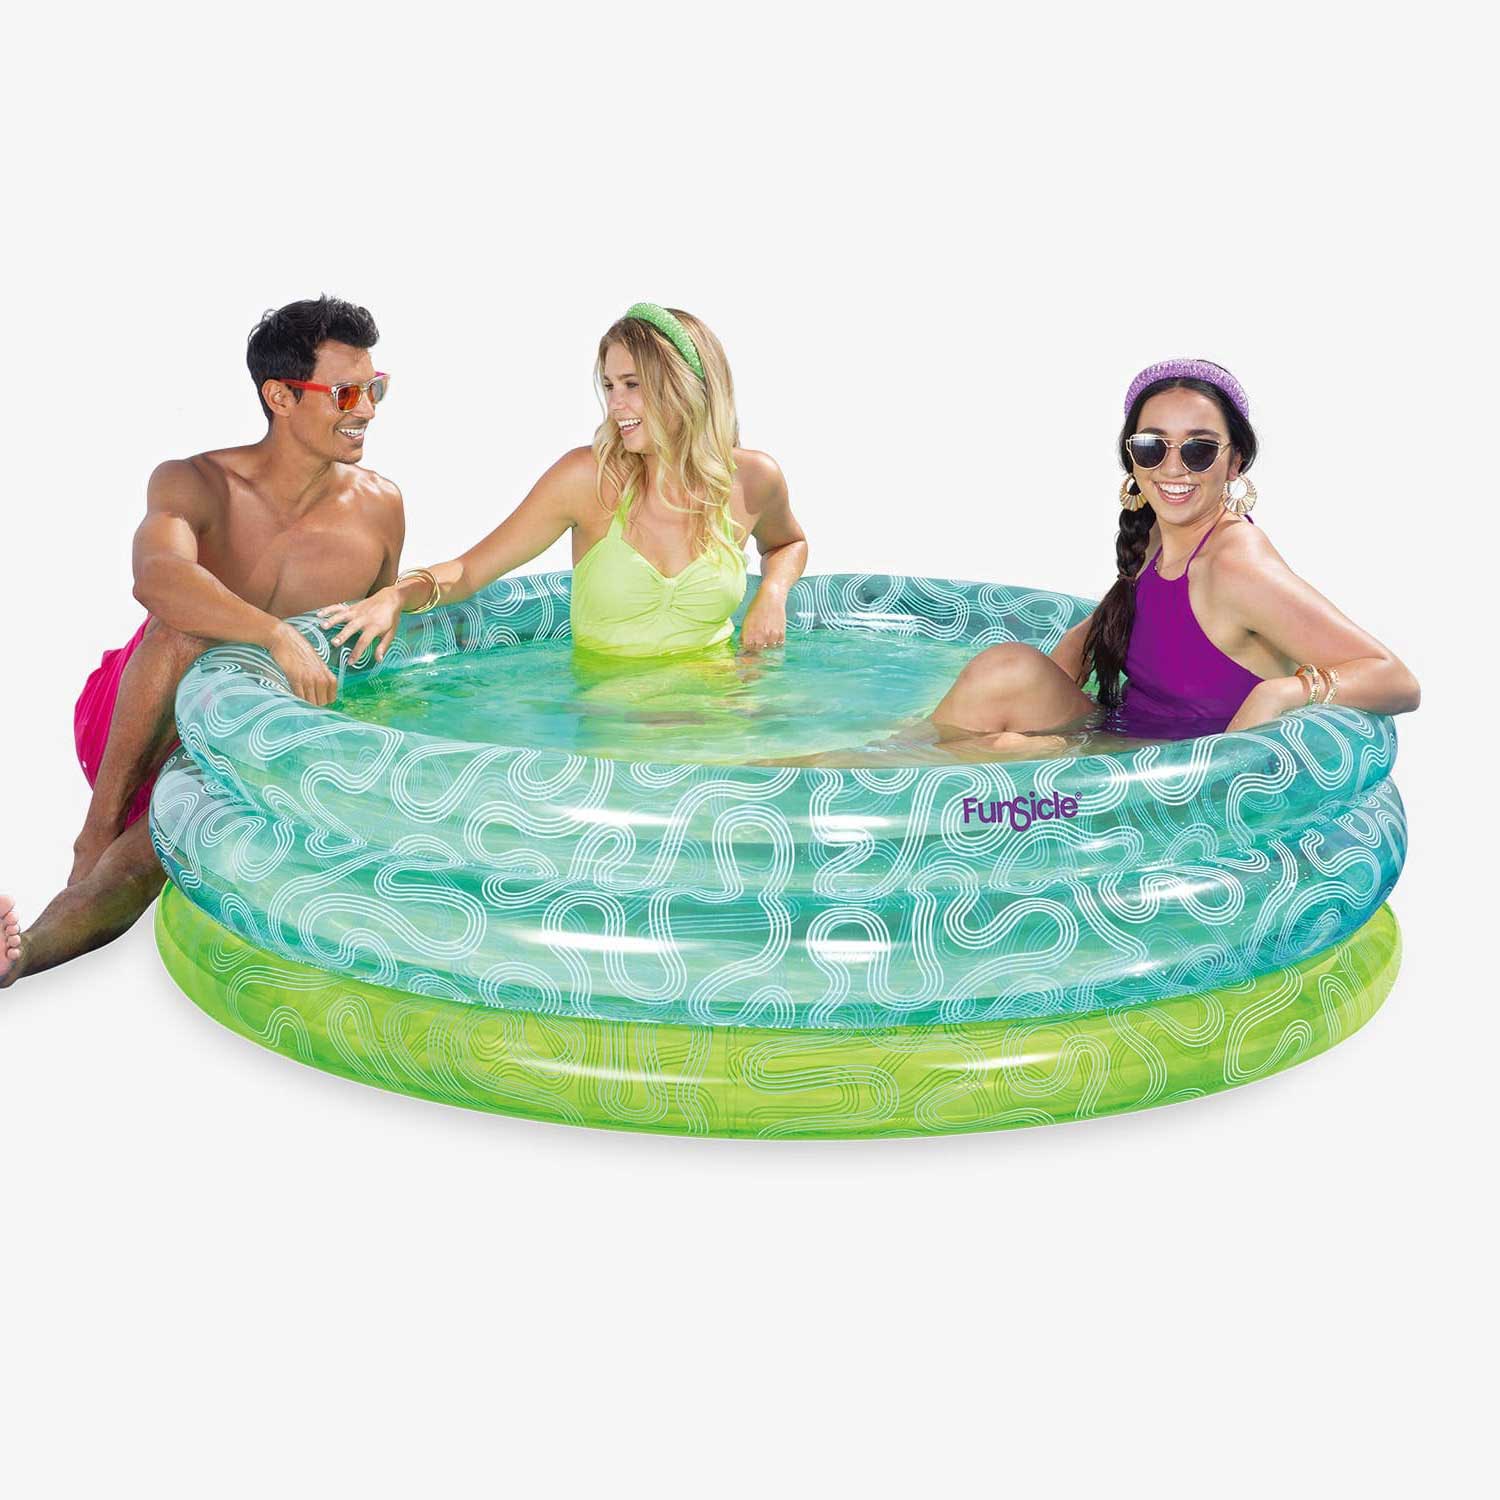 Funsicle Squiggle Pool with people